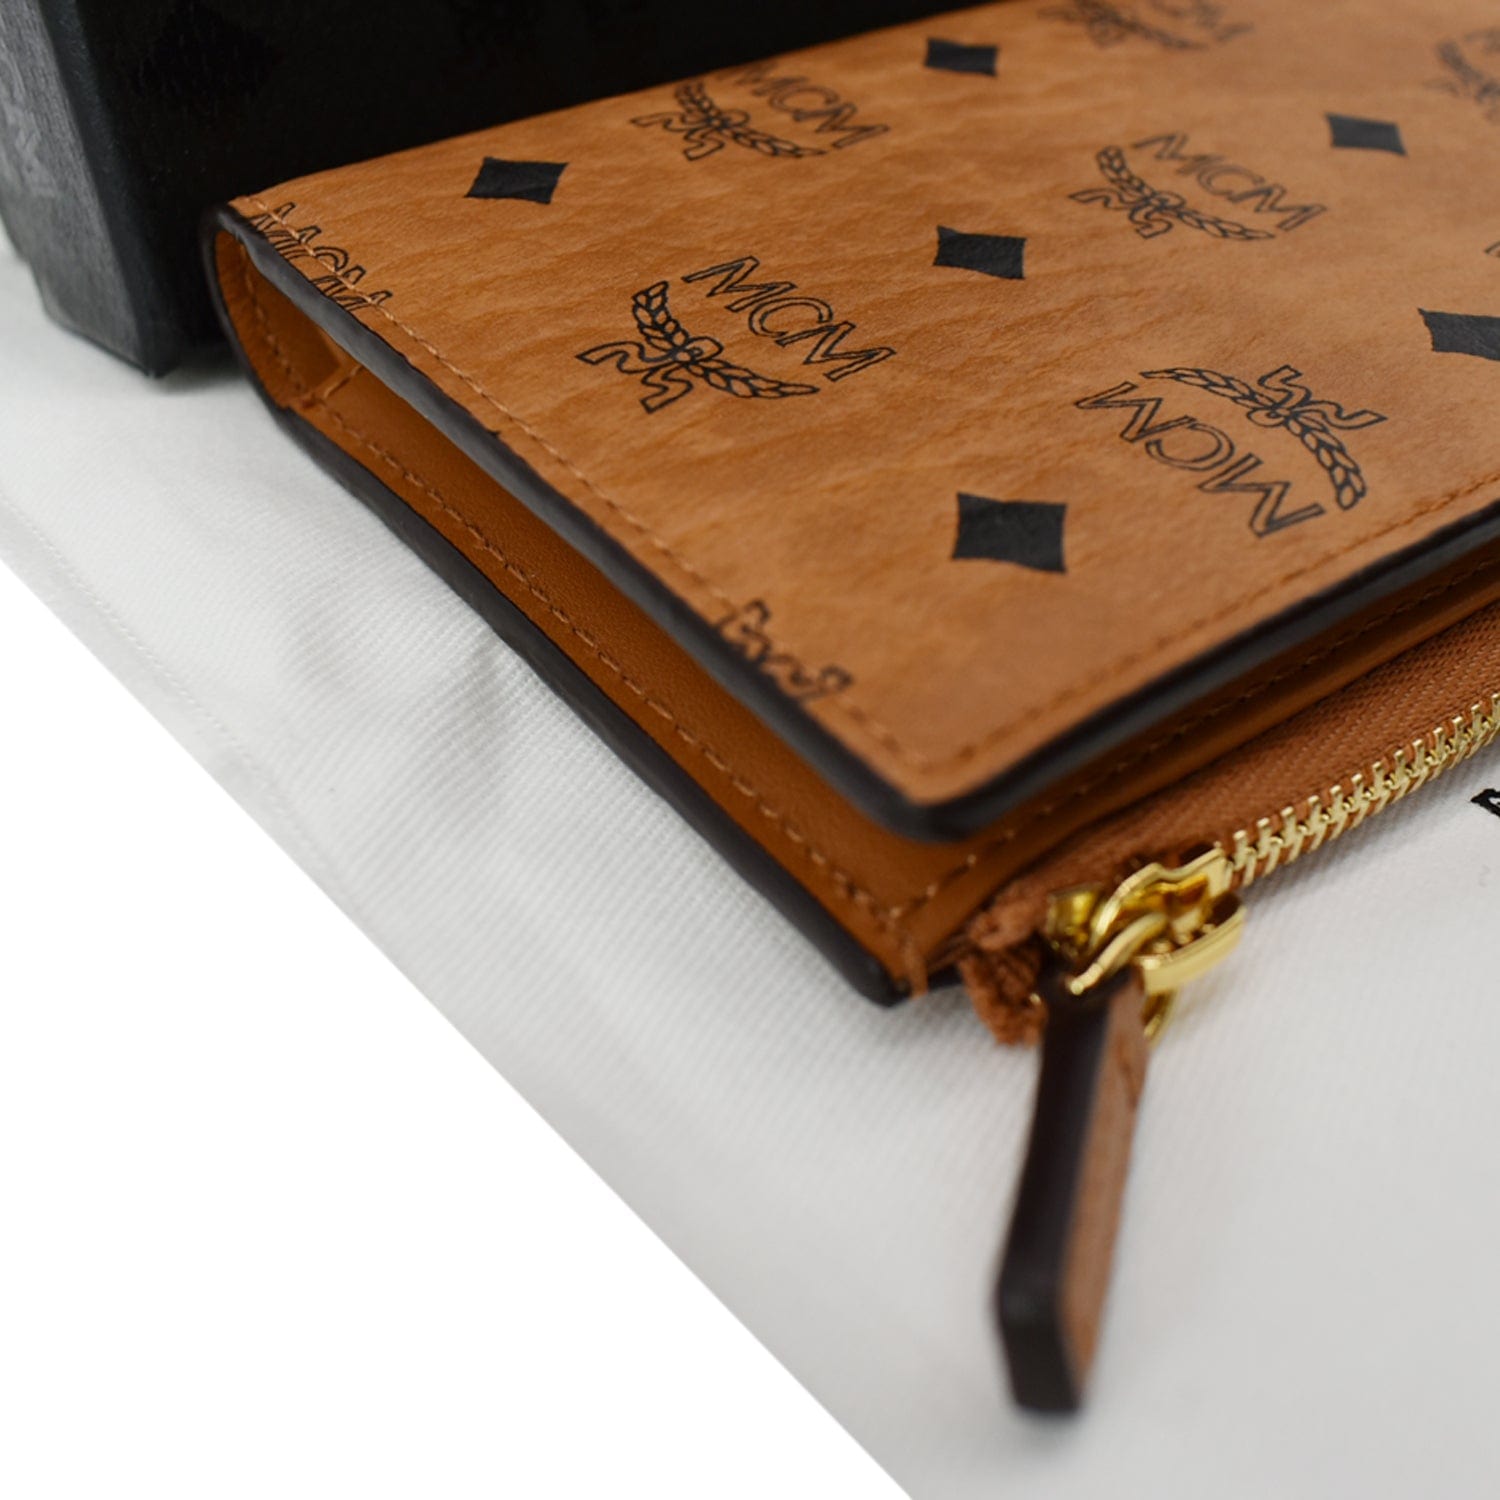 Small Bifold Wallet with Card Case in Visetos Original Cognac